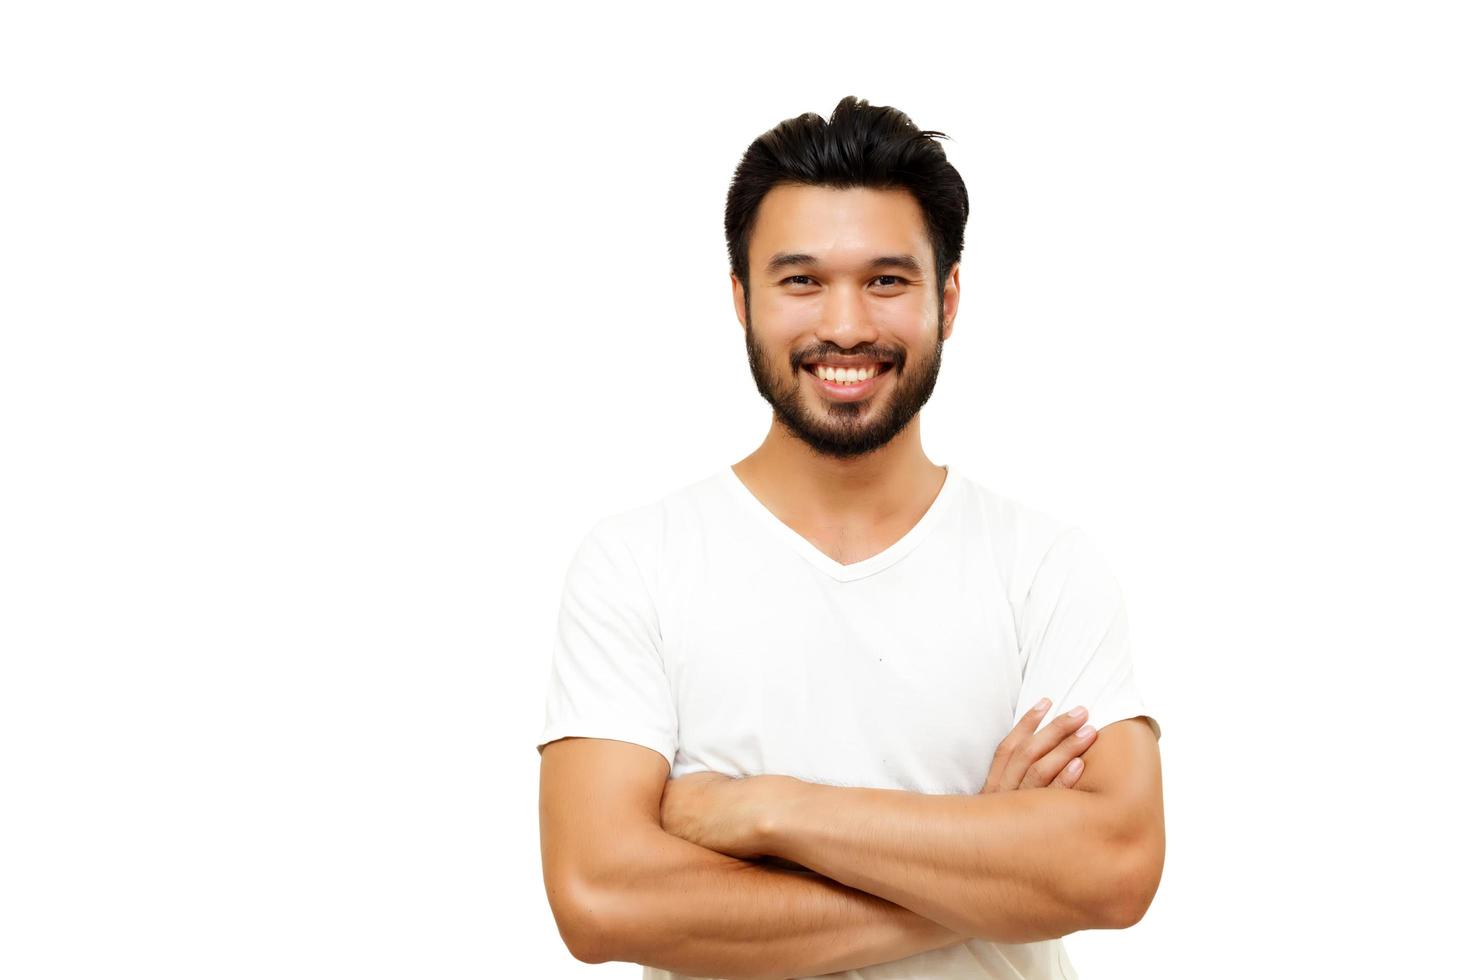 bell'uomo asiatico con i baffi sorridente su sfondo bianco foto